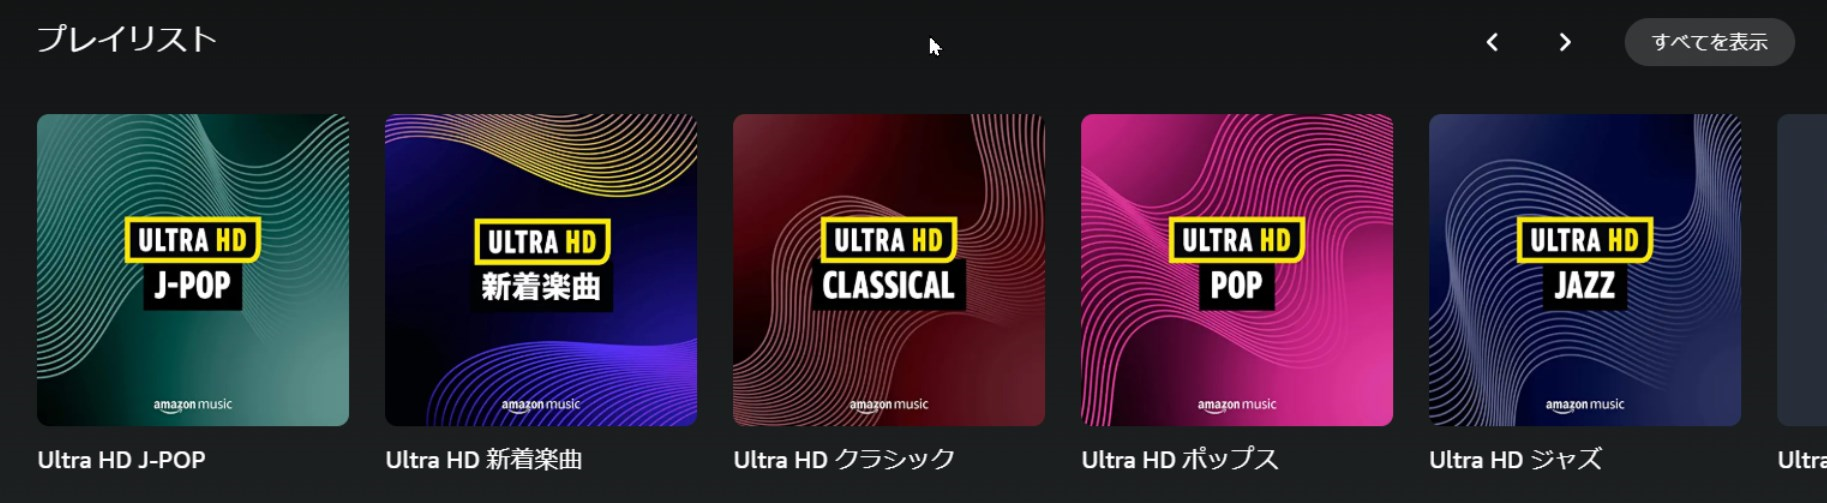 Amazon Musicの各種プレイリストのUltra HD表示